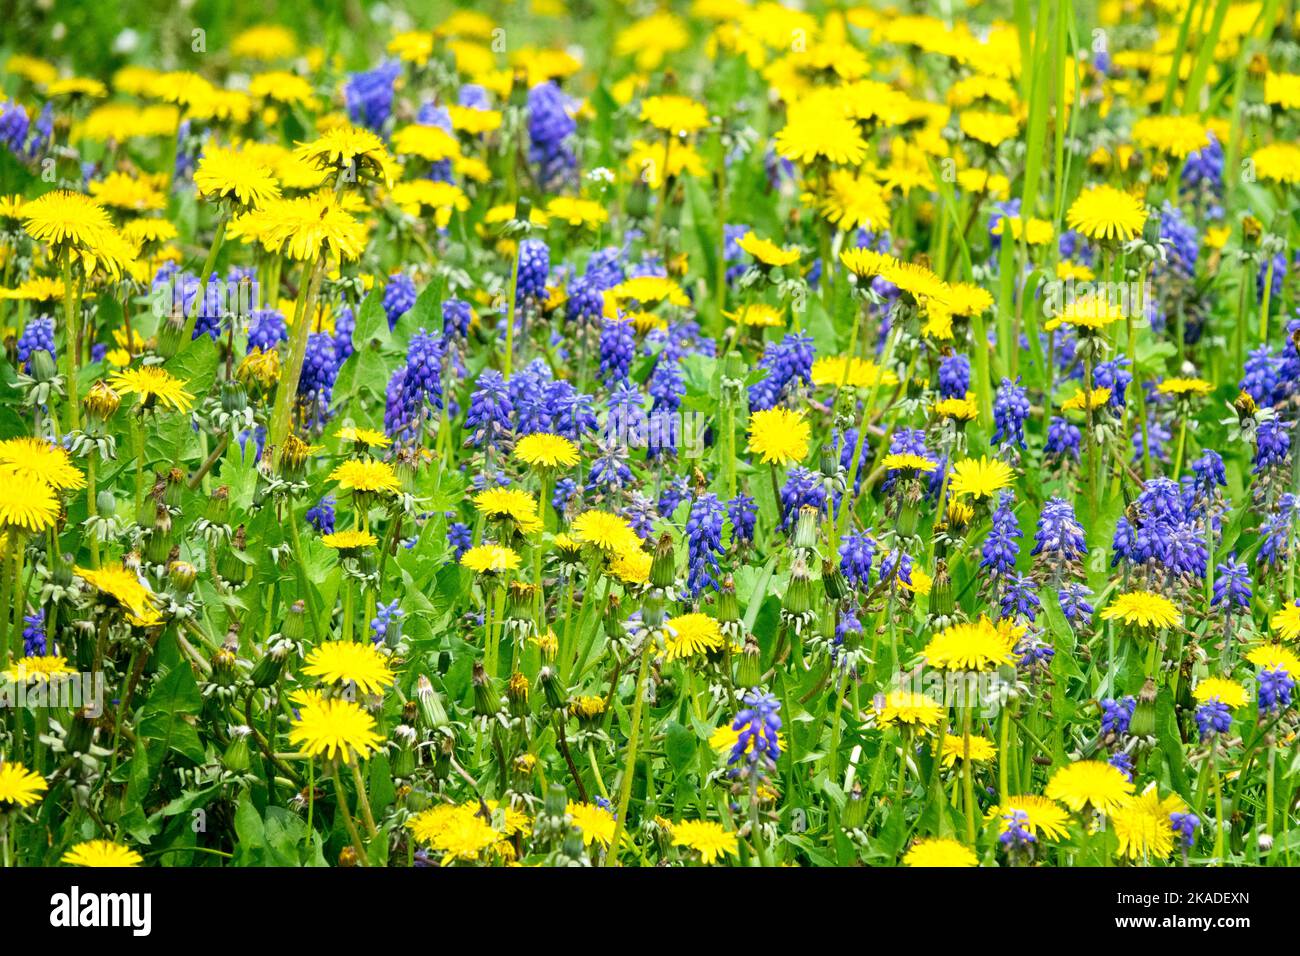 Muscari in a lawn, Blue yellow Dandelions, Spring, Garden, Meadow, Lawn Stock Photo